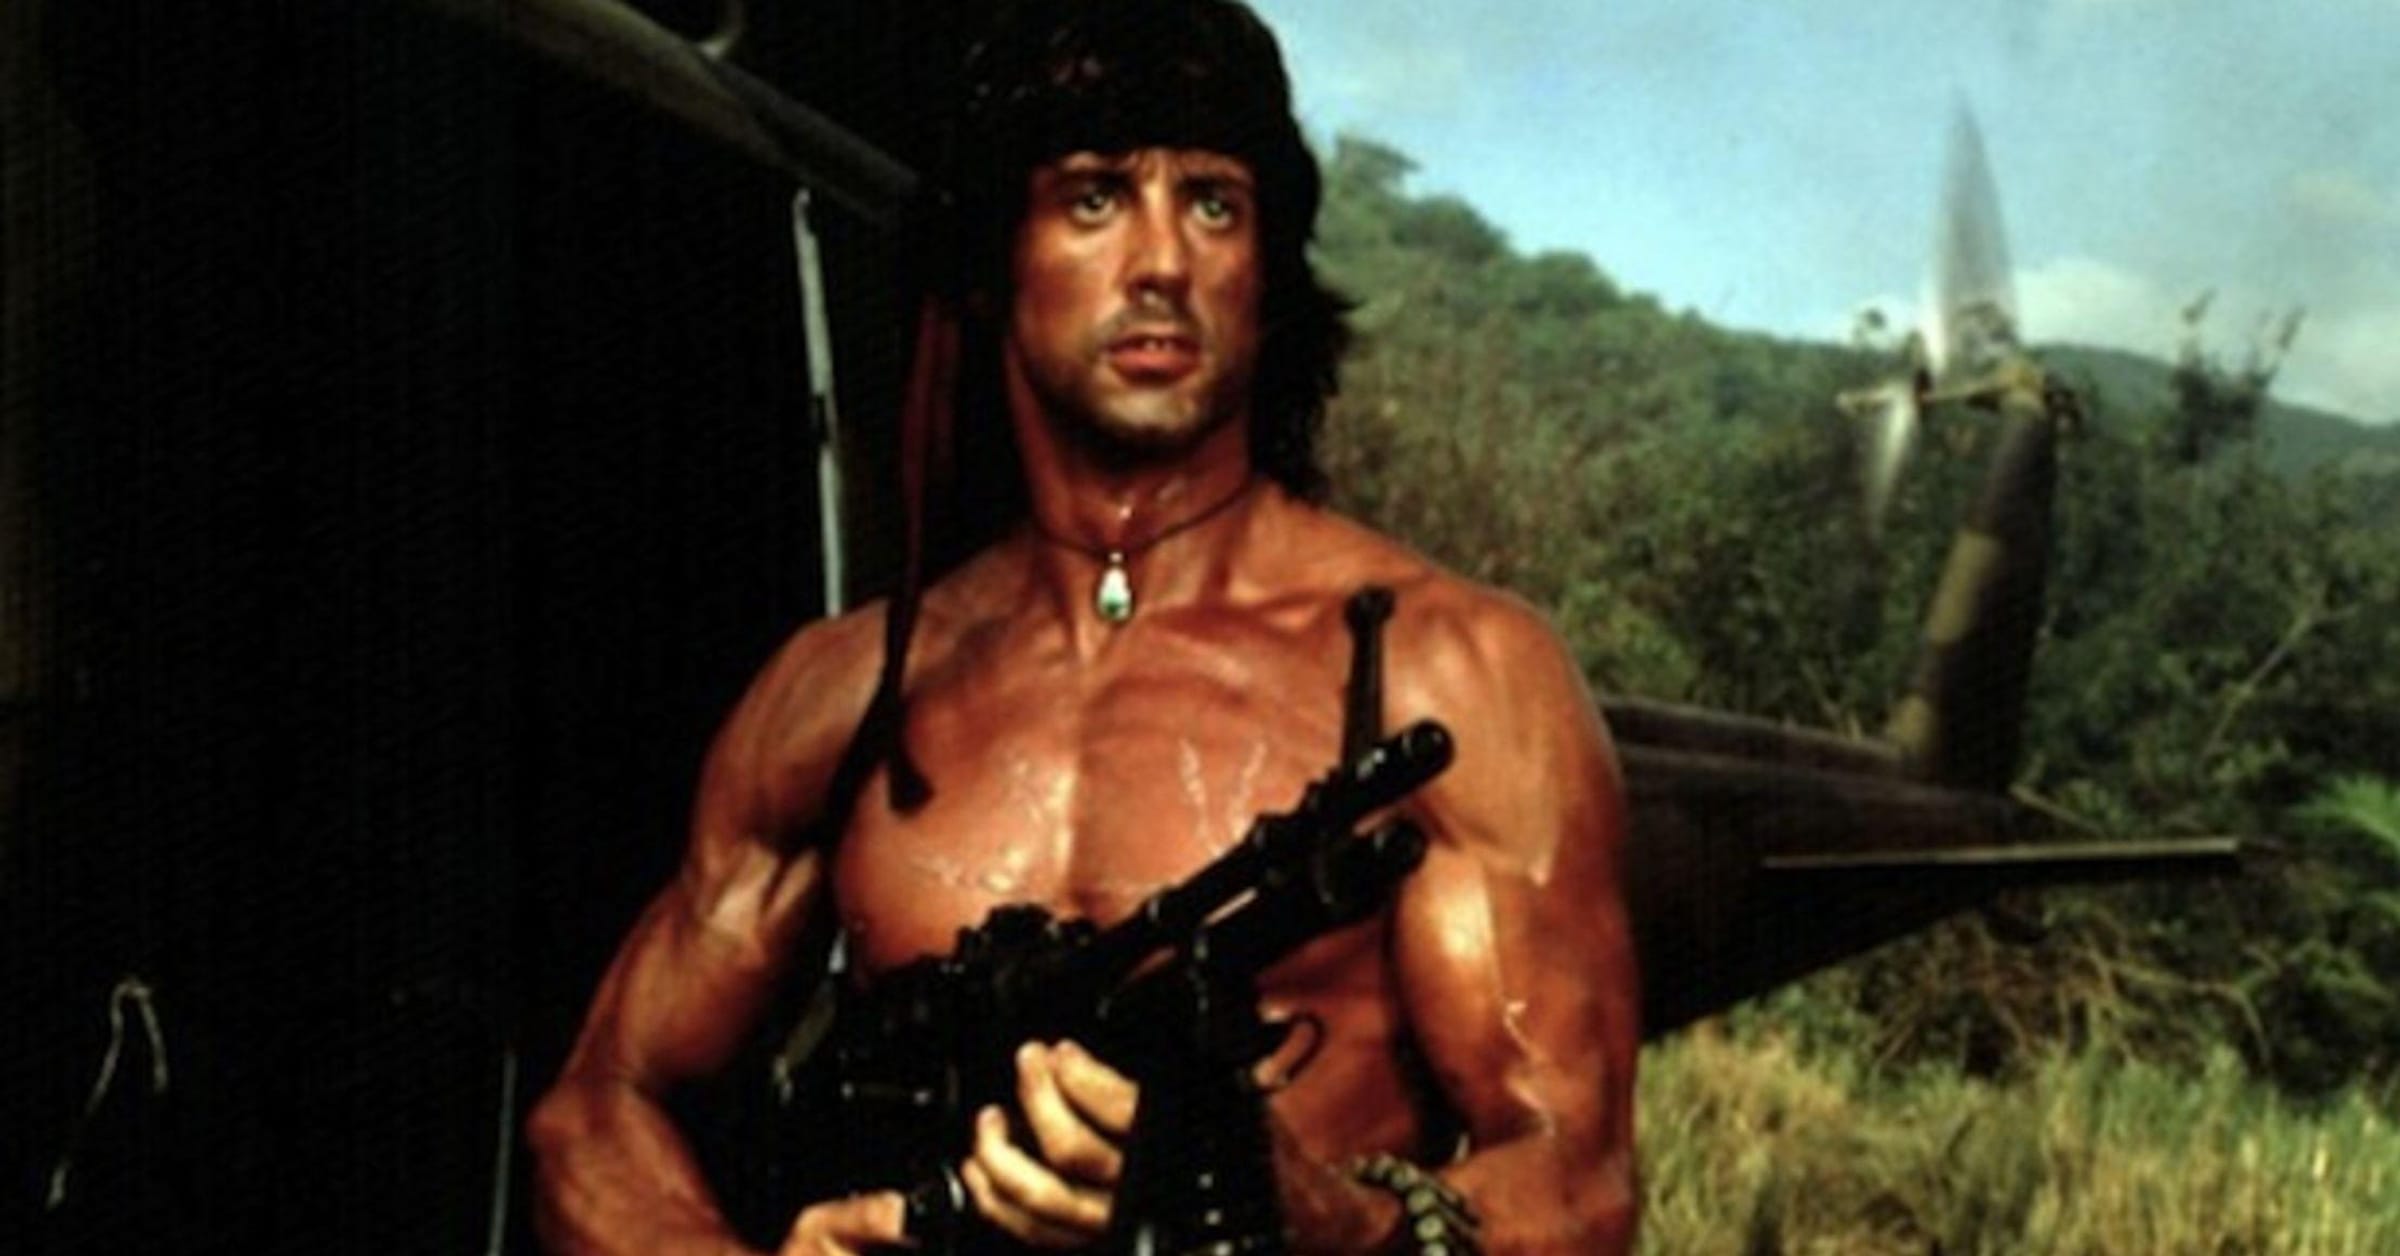 Rambo fatality/The throat rip from Rambo 4